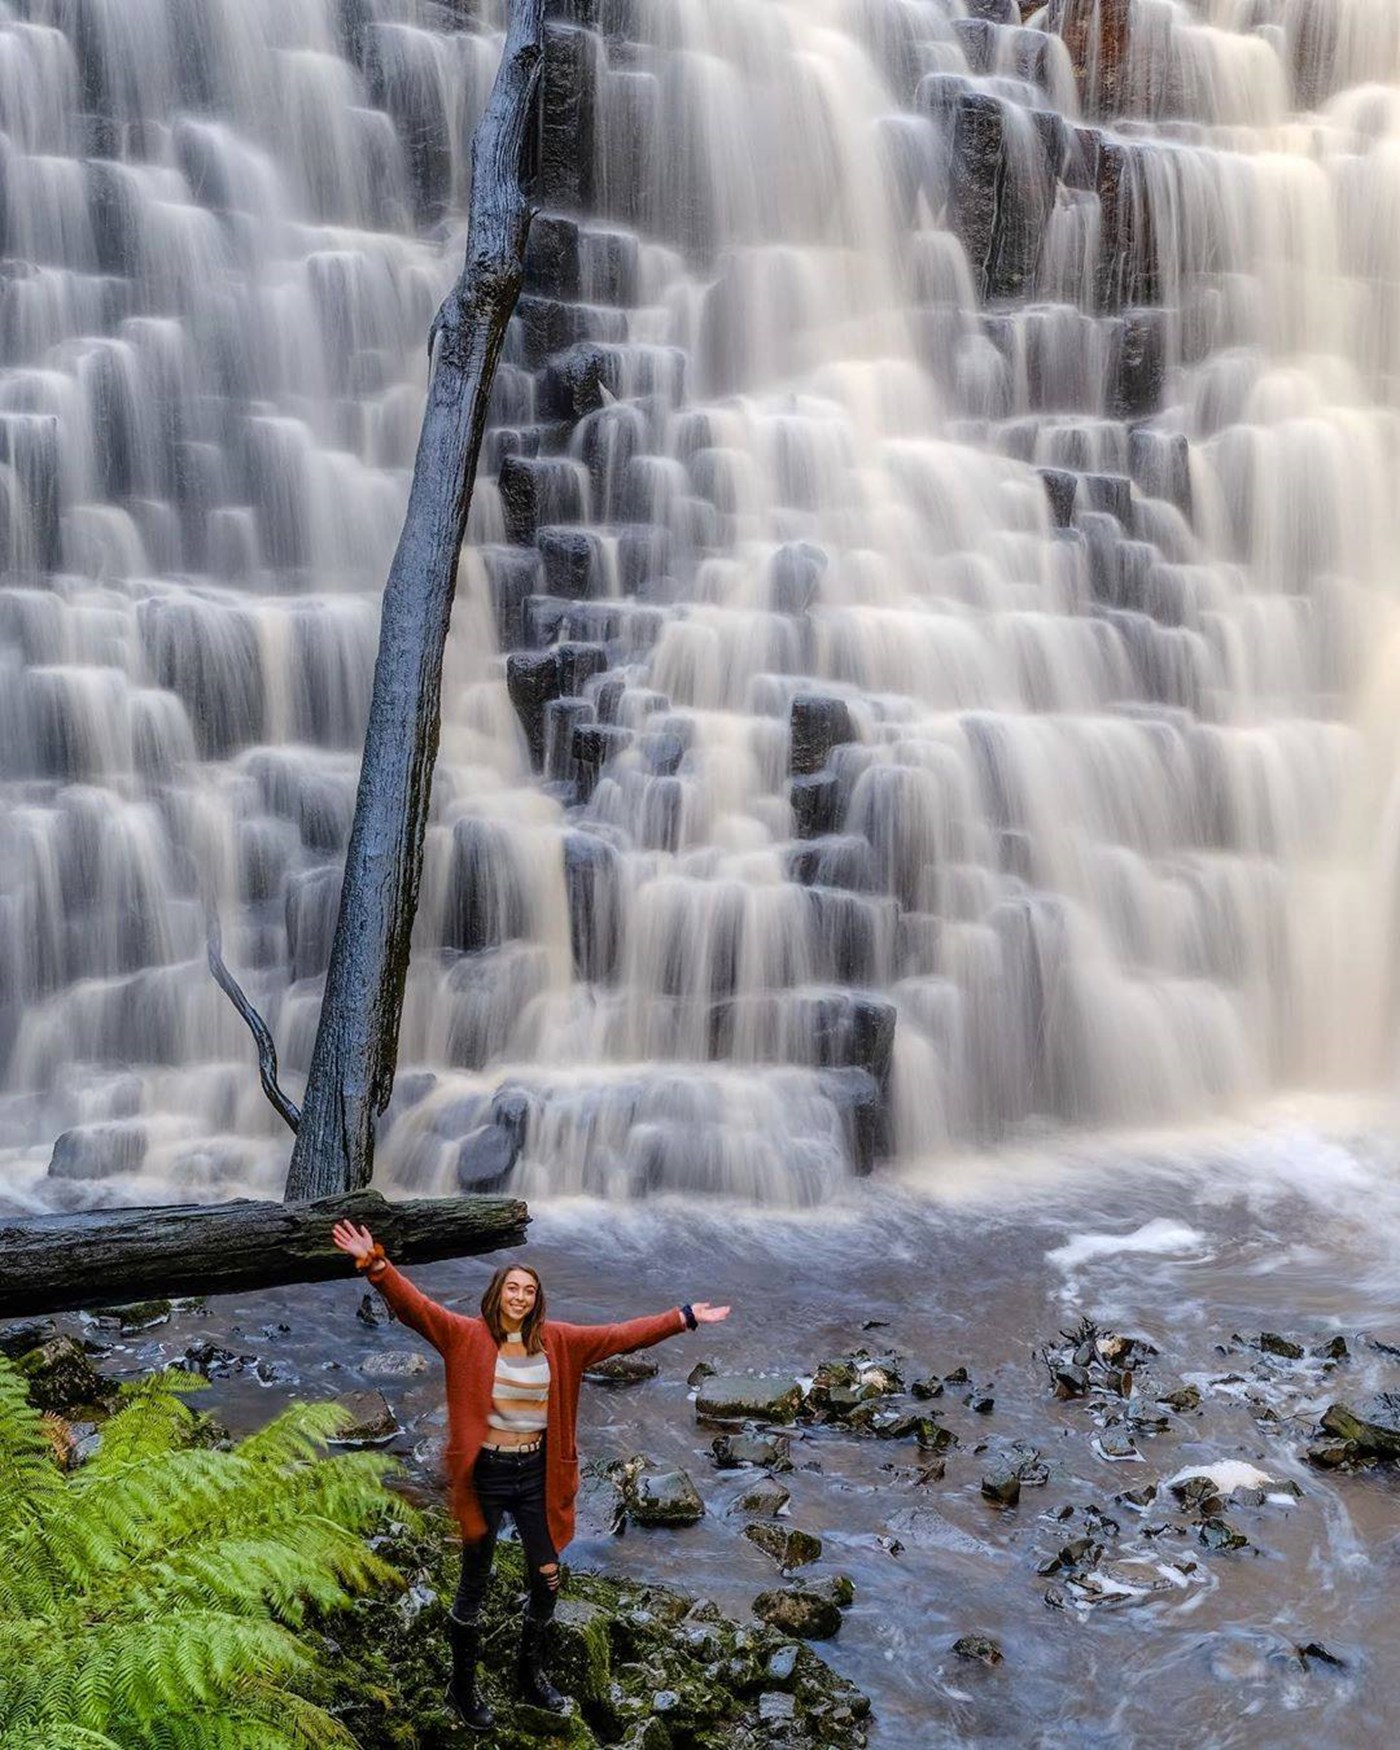 Dip Falls (Image Credit: Leanne Marshall)